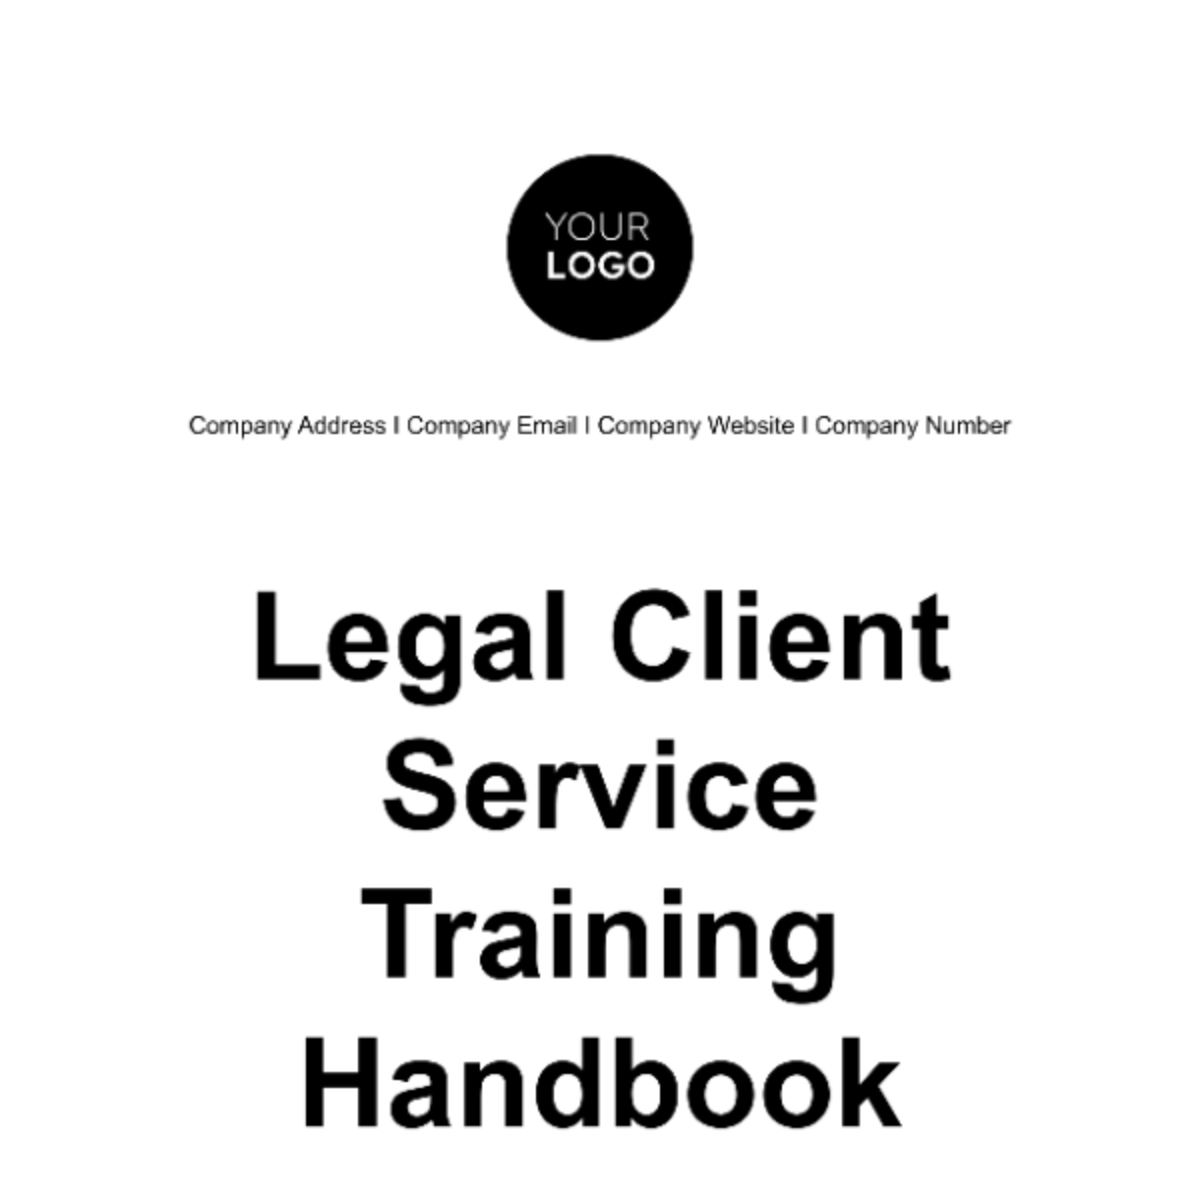 Legal Client Service Training Handbook Template